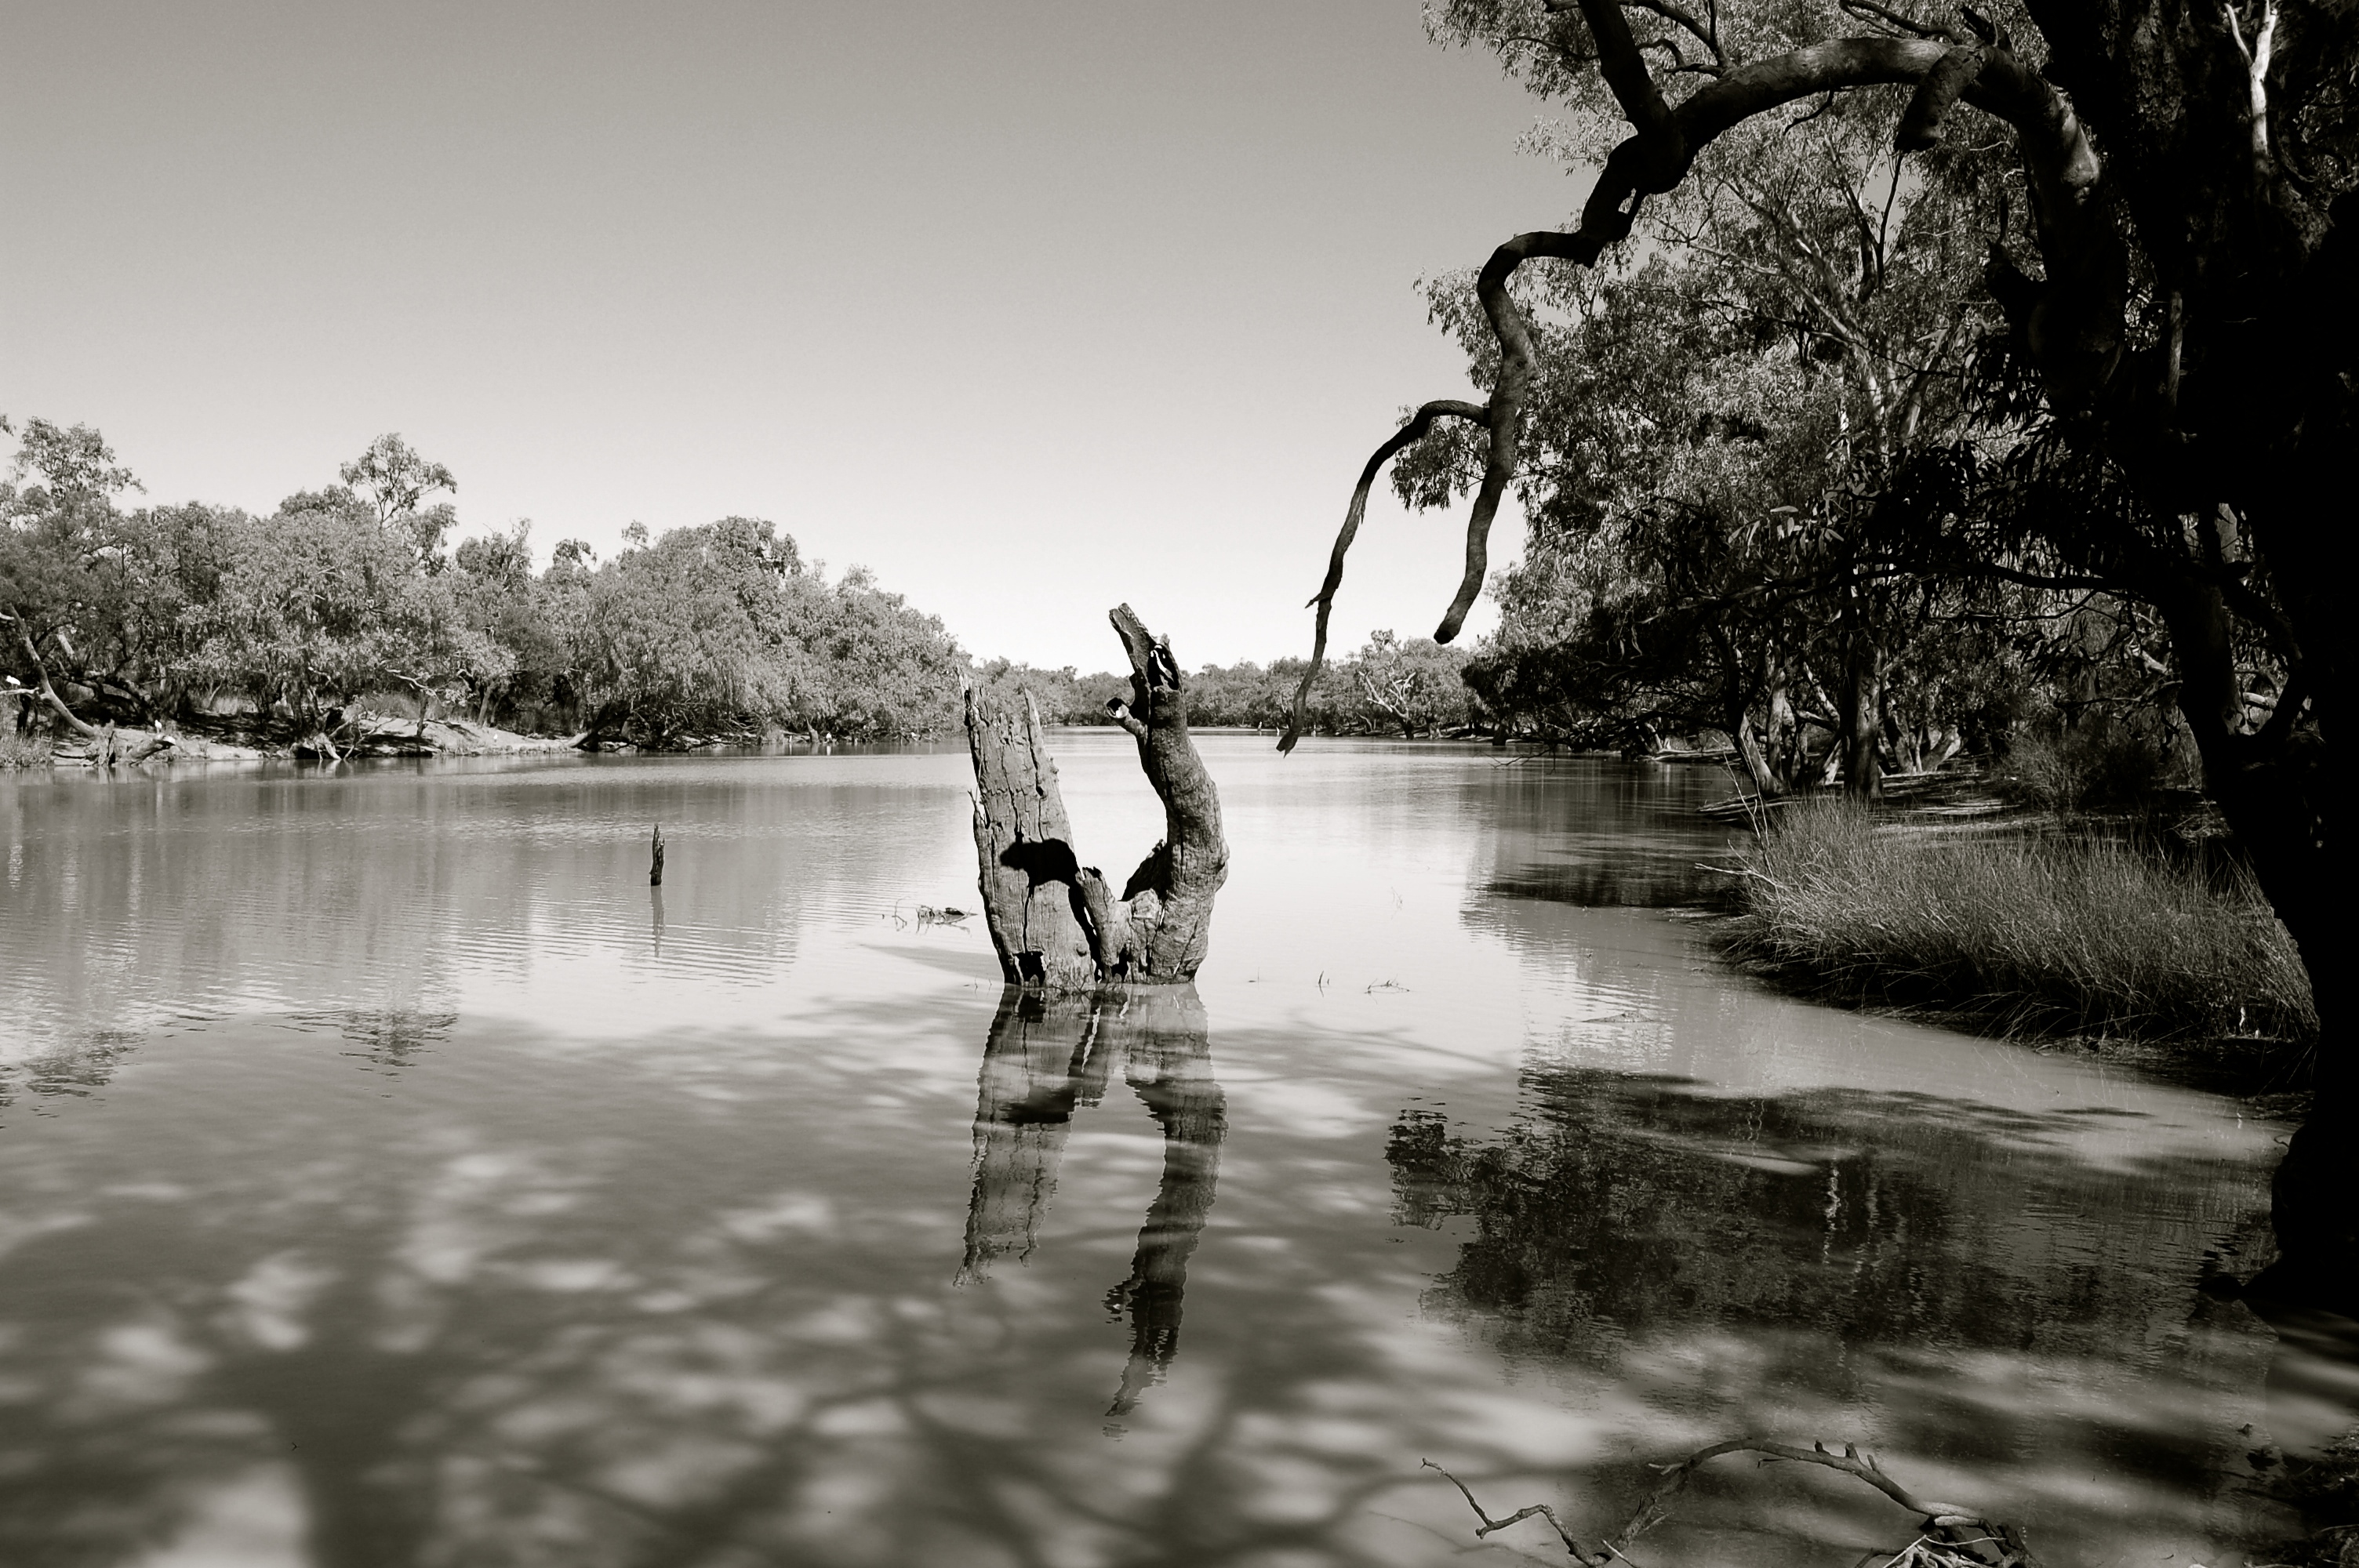 Outback Australia (Paroo River)